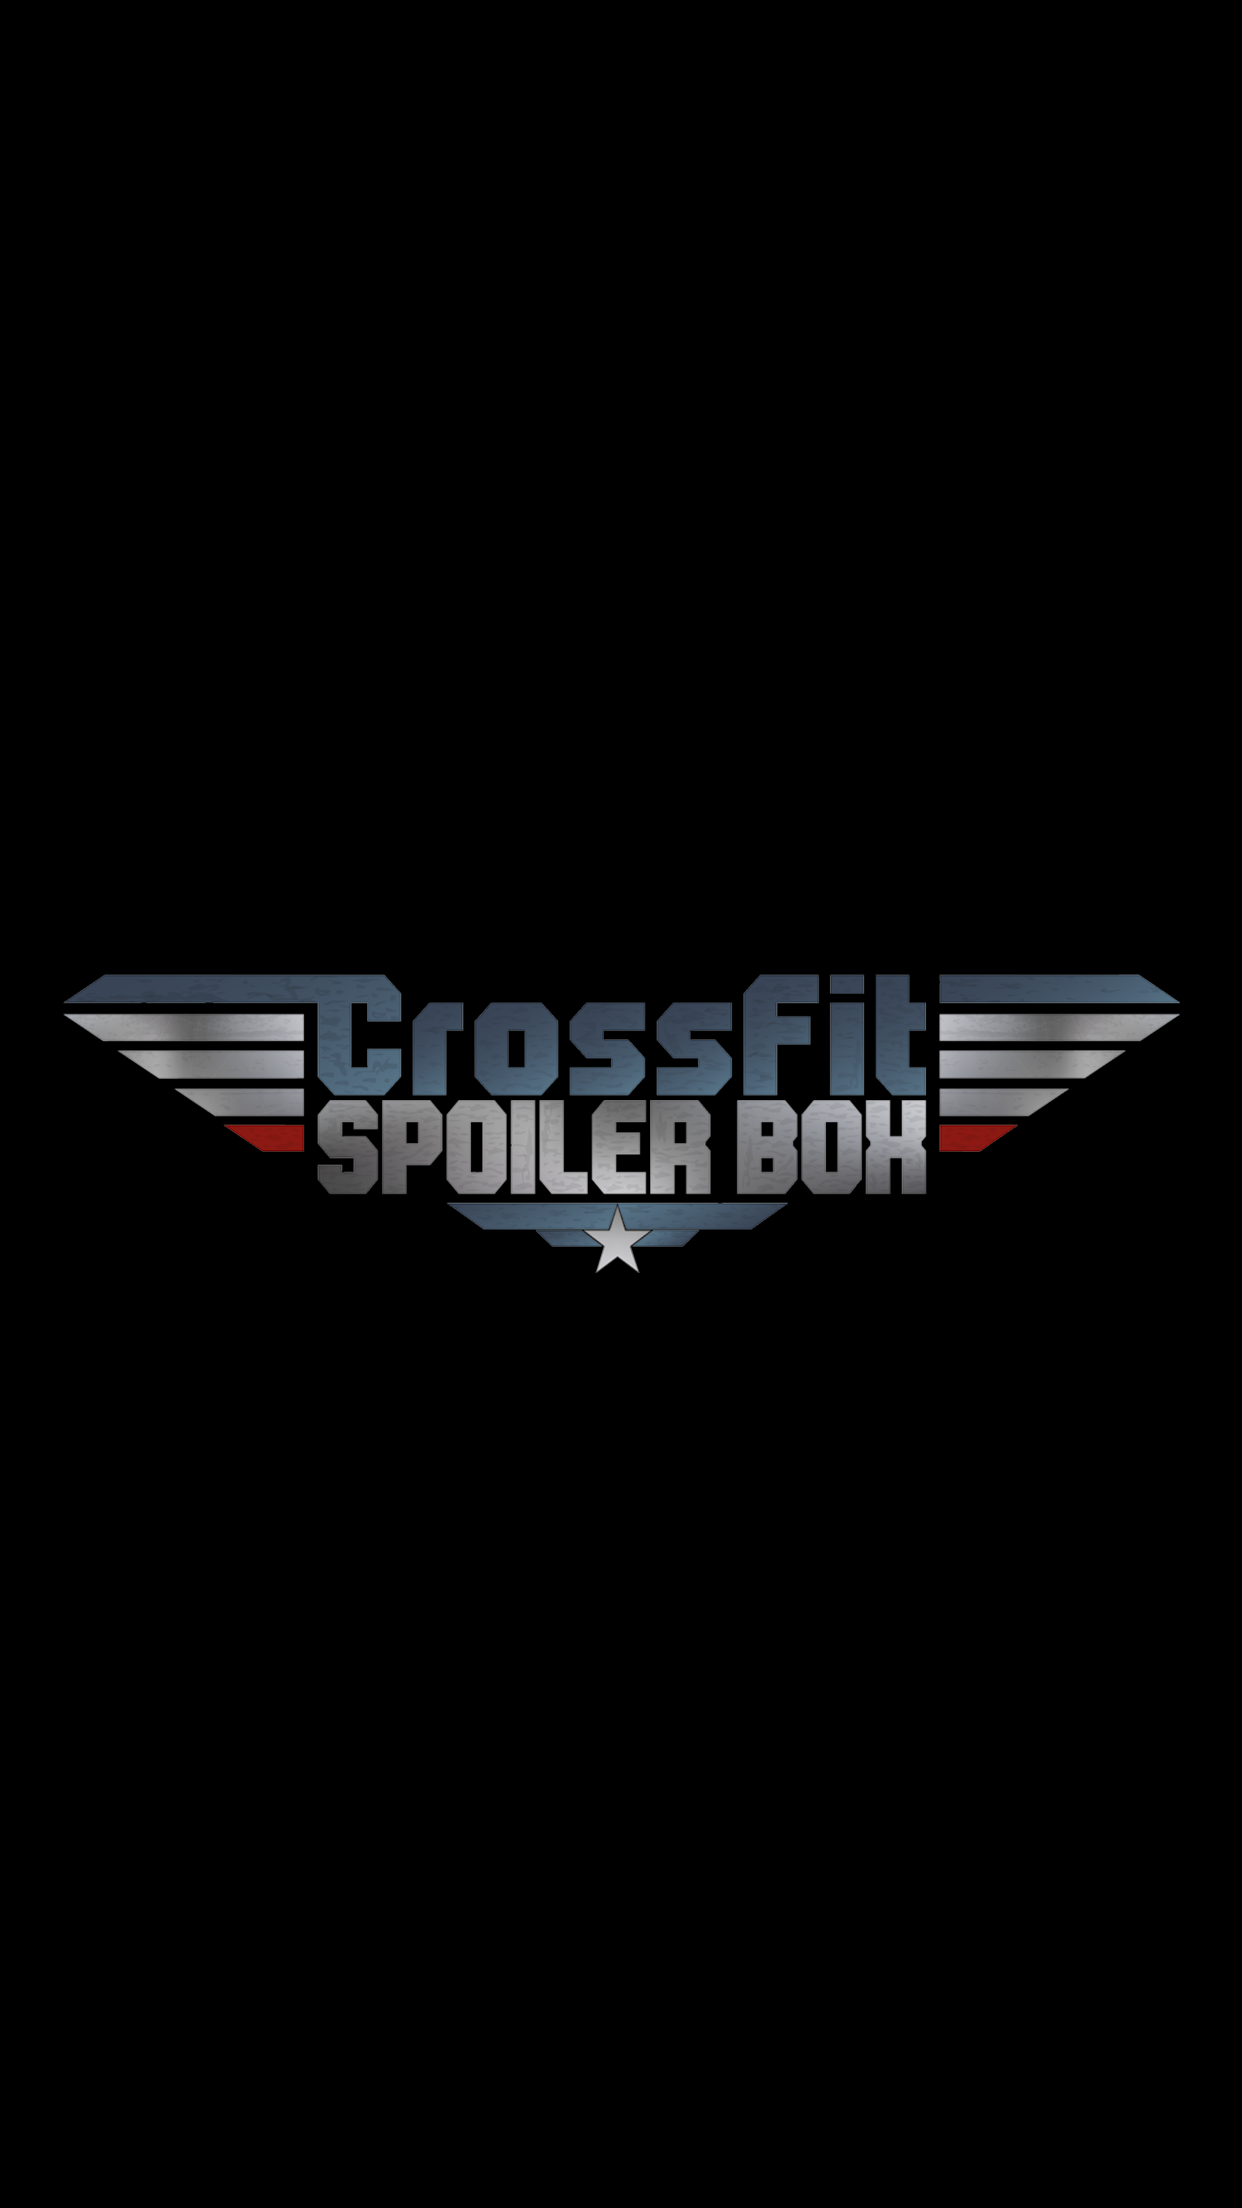 Fondos de Pantalla - Spoiler Box CrossFit